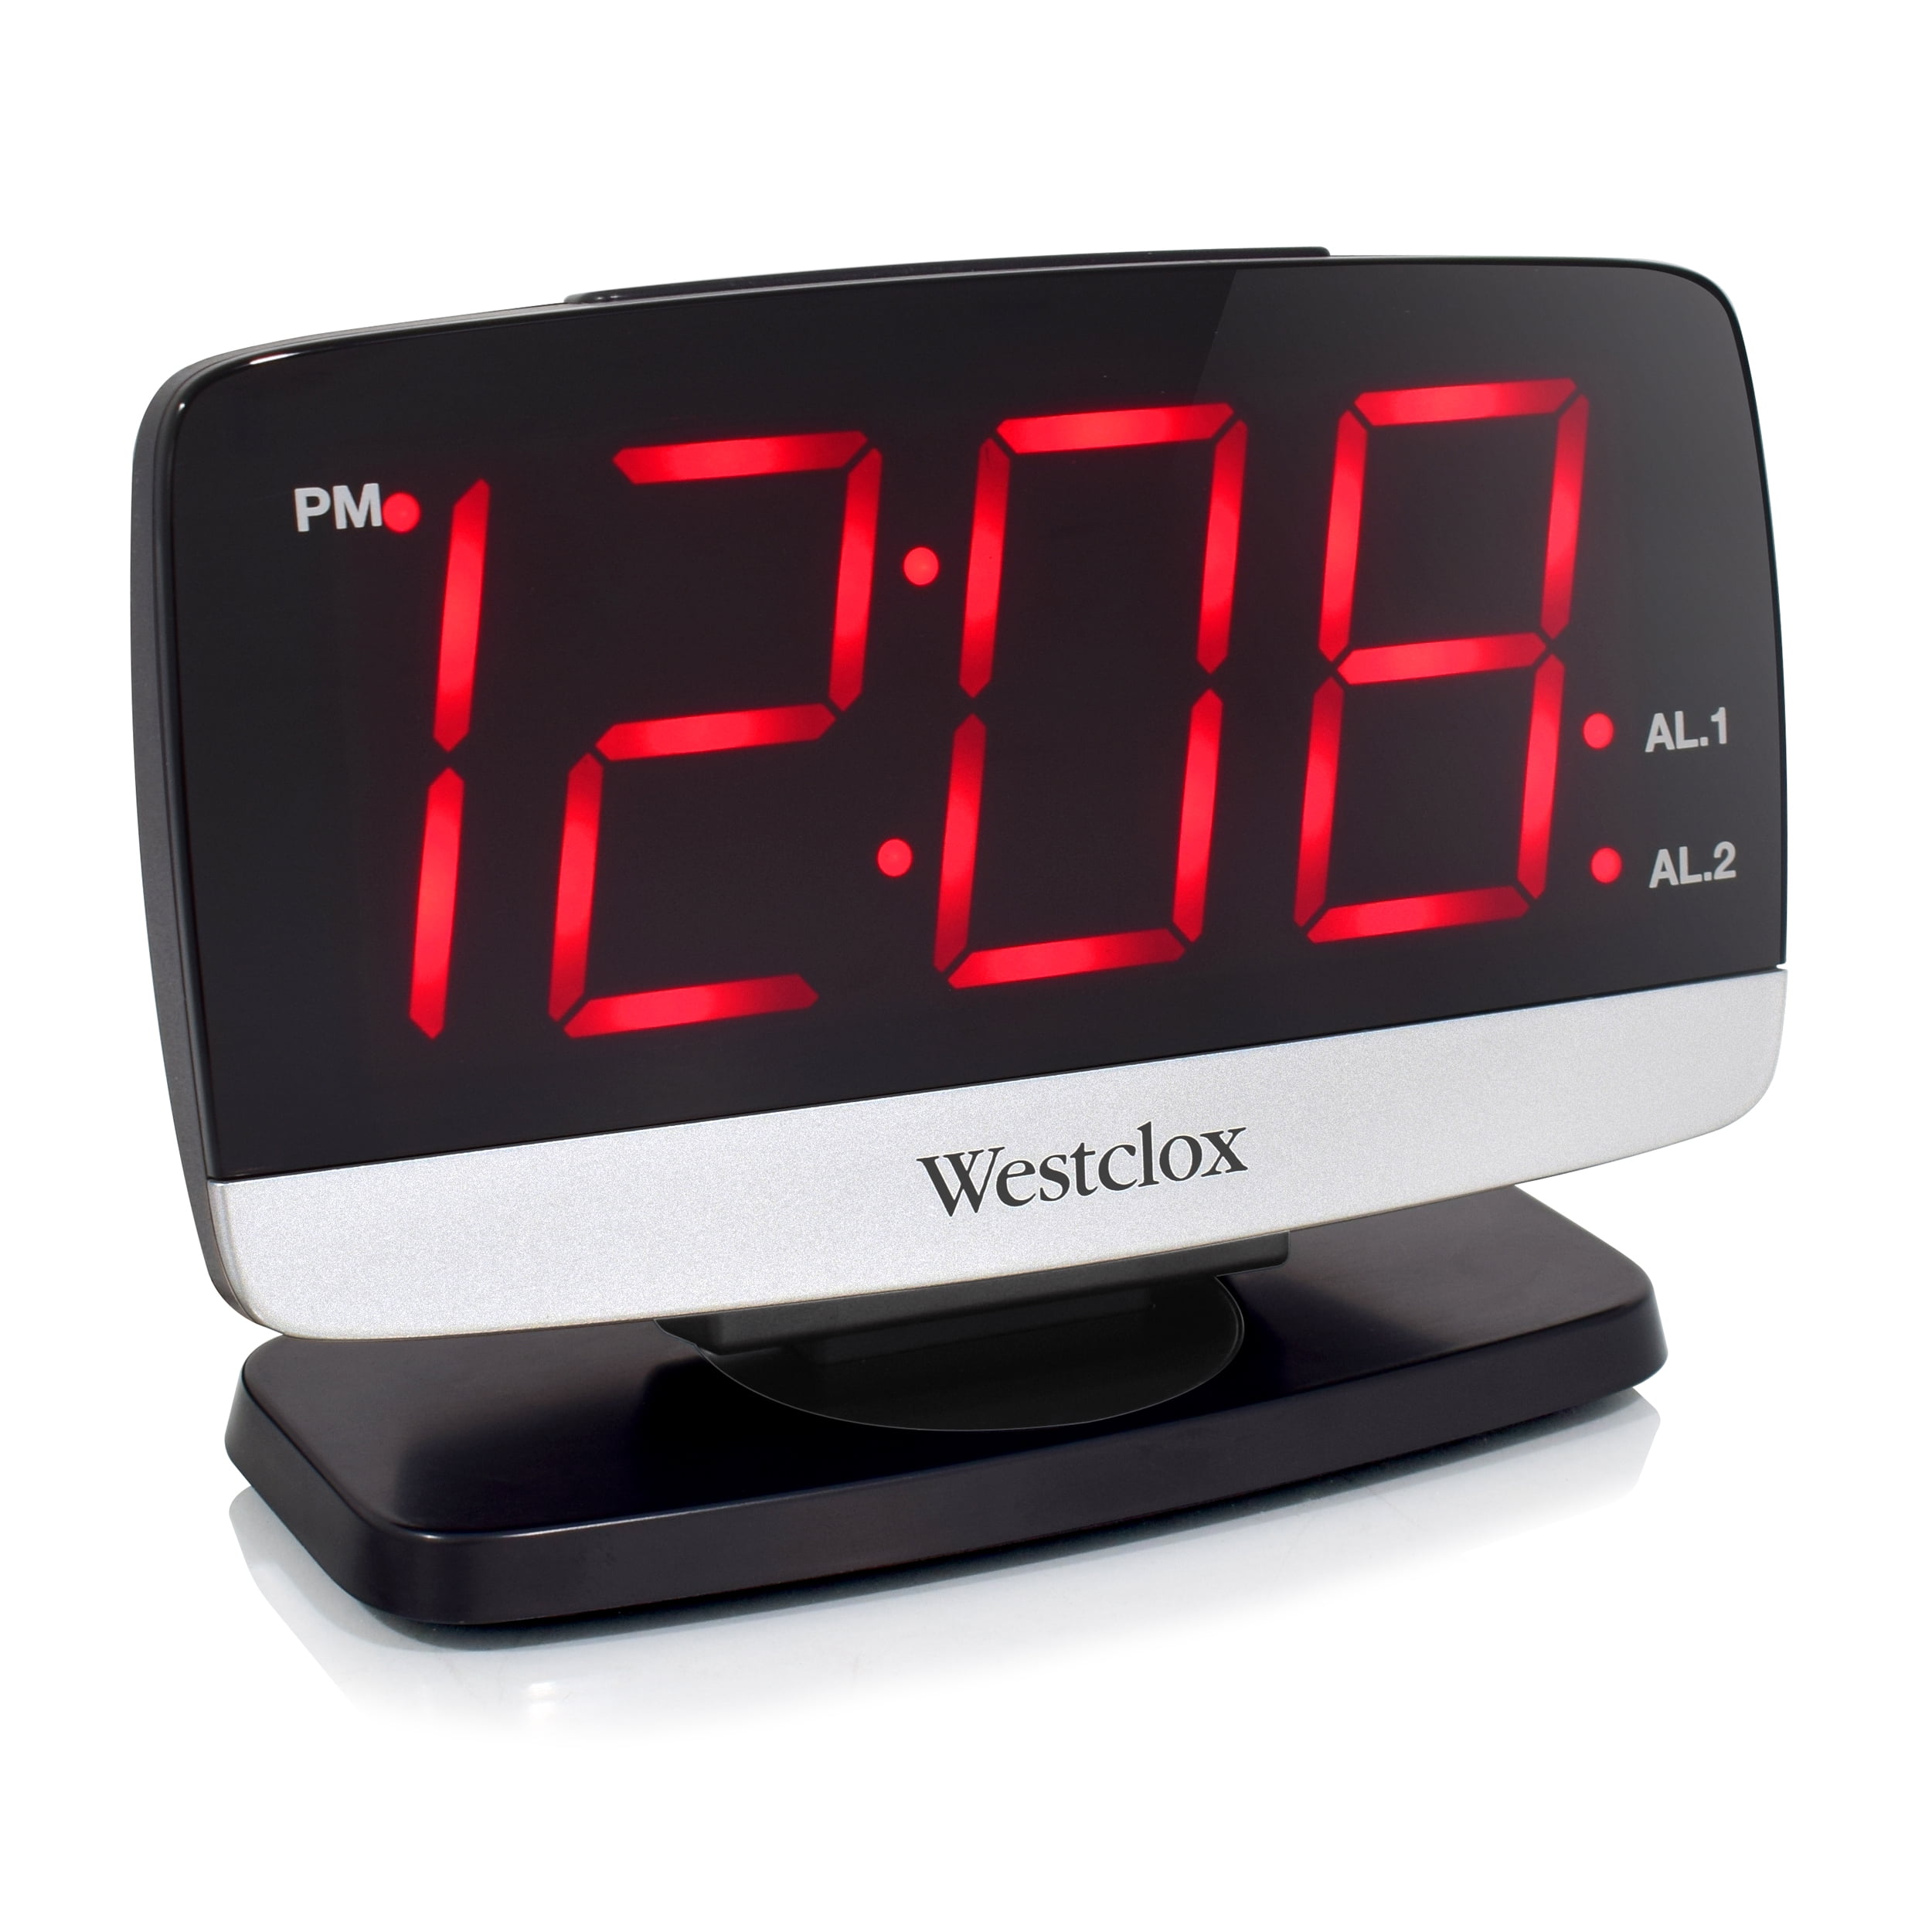 Details about   New Mirror LED Digital FM Radio Alarm Clock Electronic Projection Desk Clock 